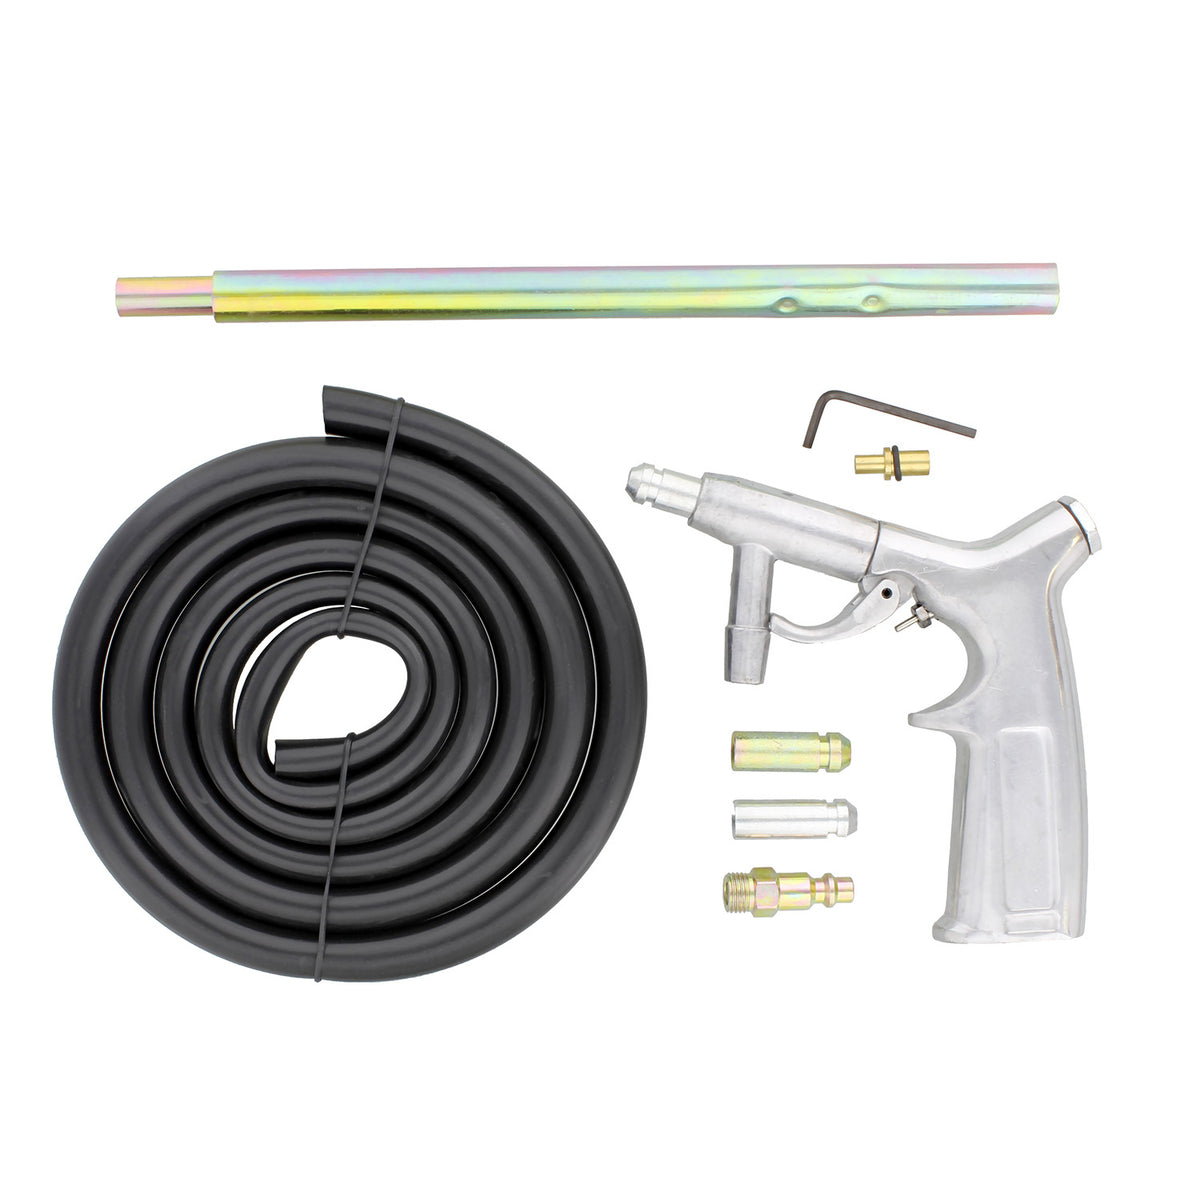 Sandblaster Gun Kit – 7 Piece Pressure Washer Sandblasting Kit